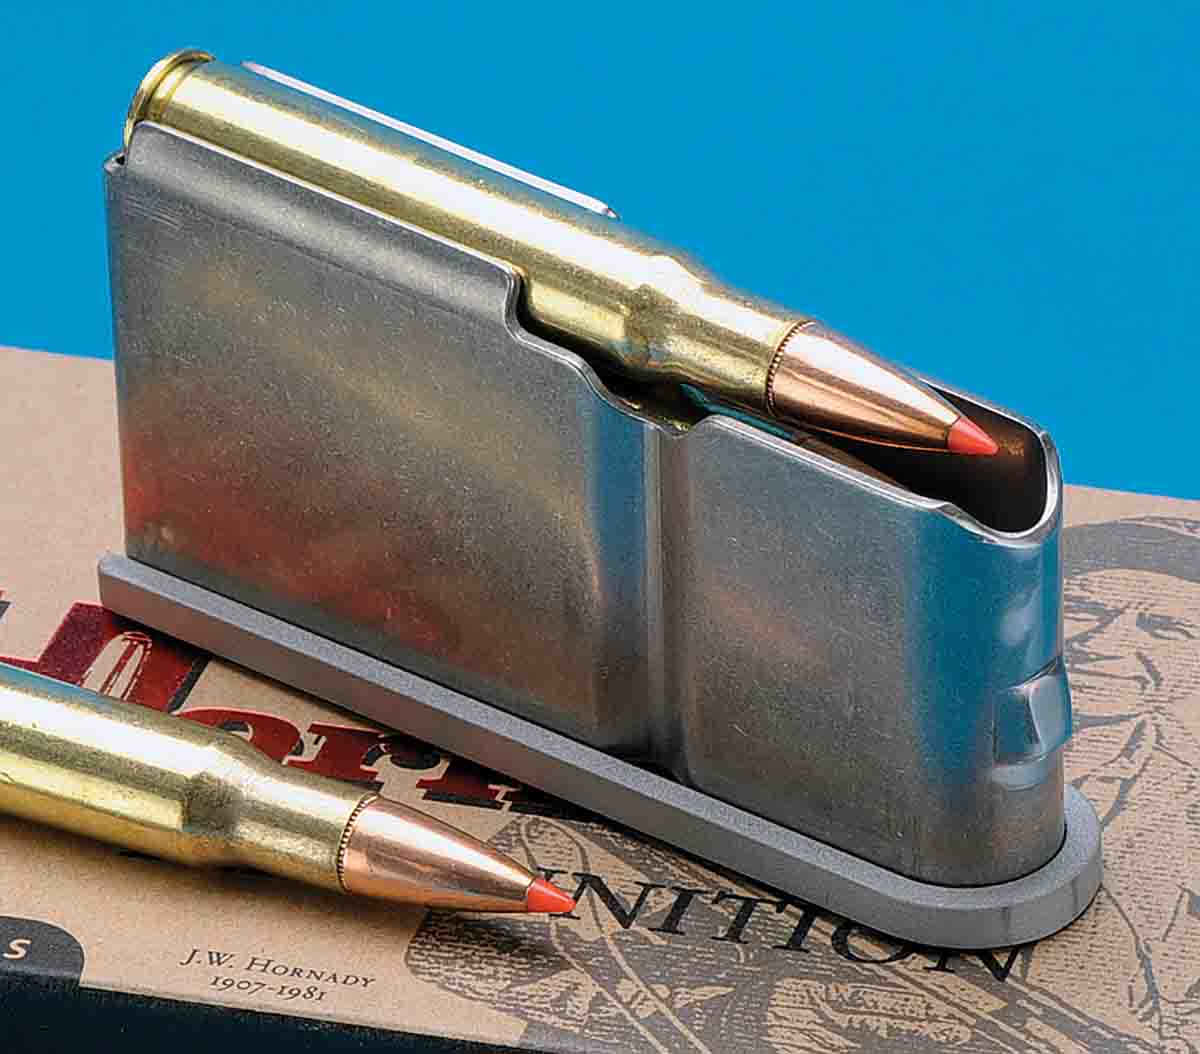 The lightweight magazine holds three rounds of .30-06 ammunition.